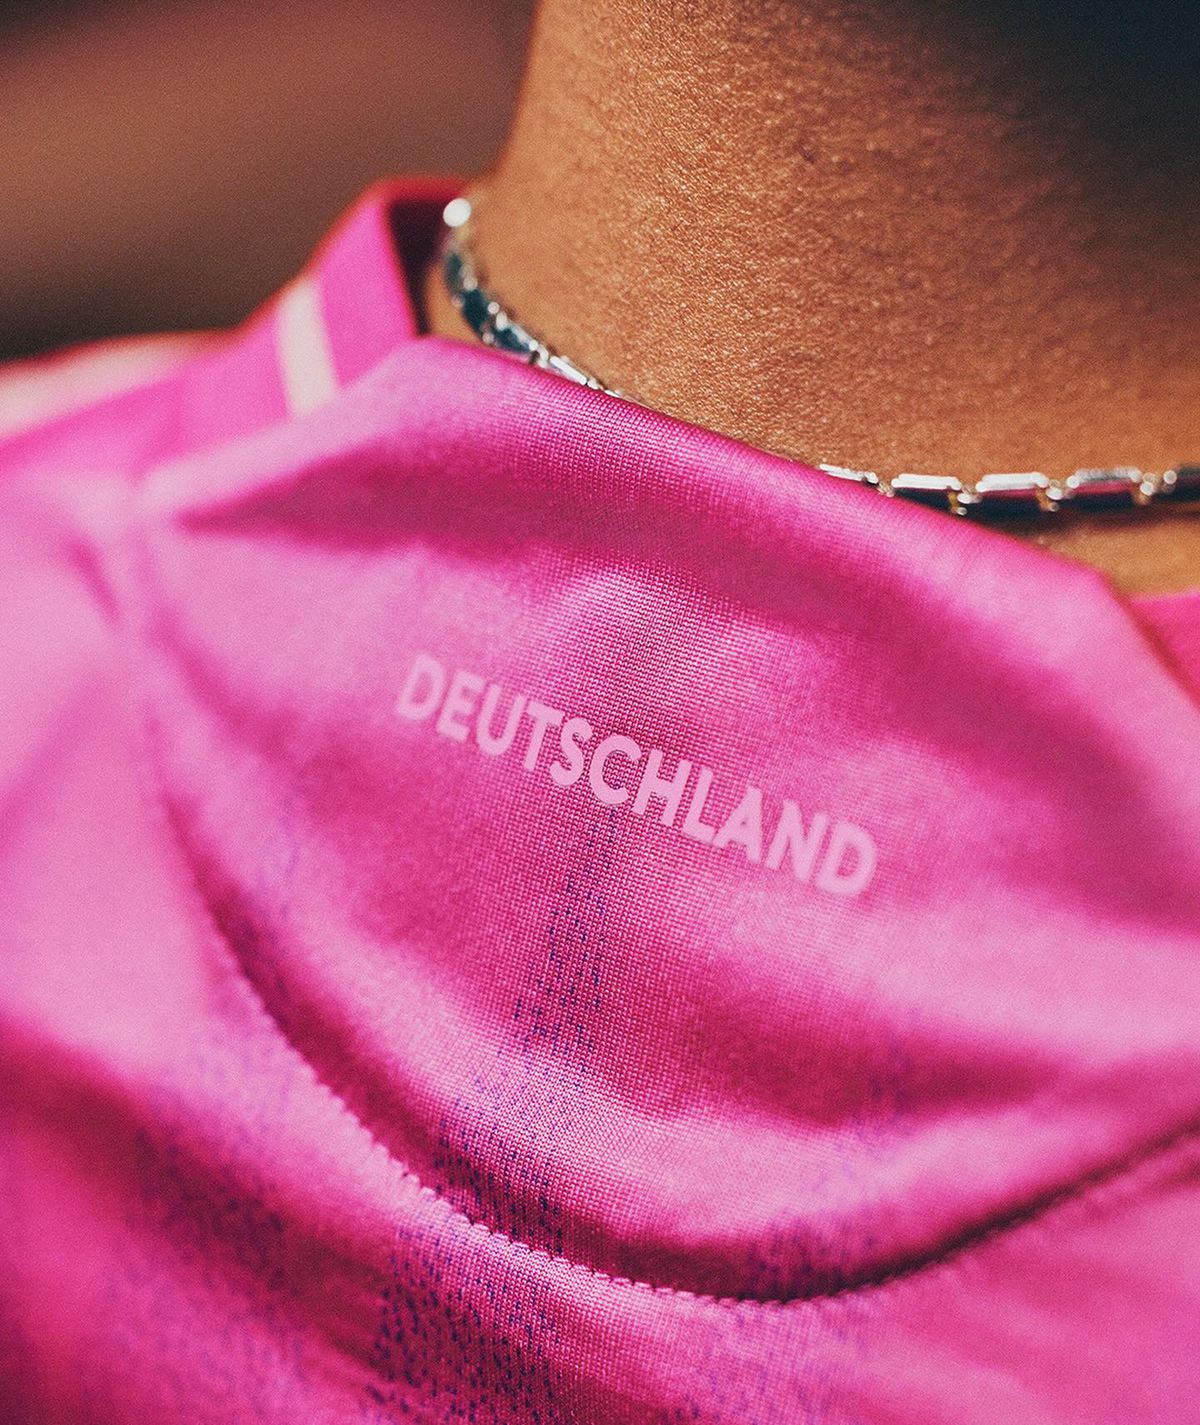 Germania - echipament roz